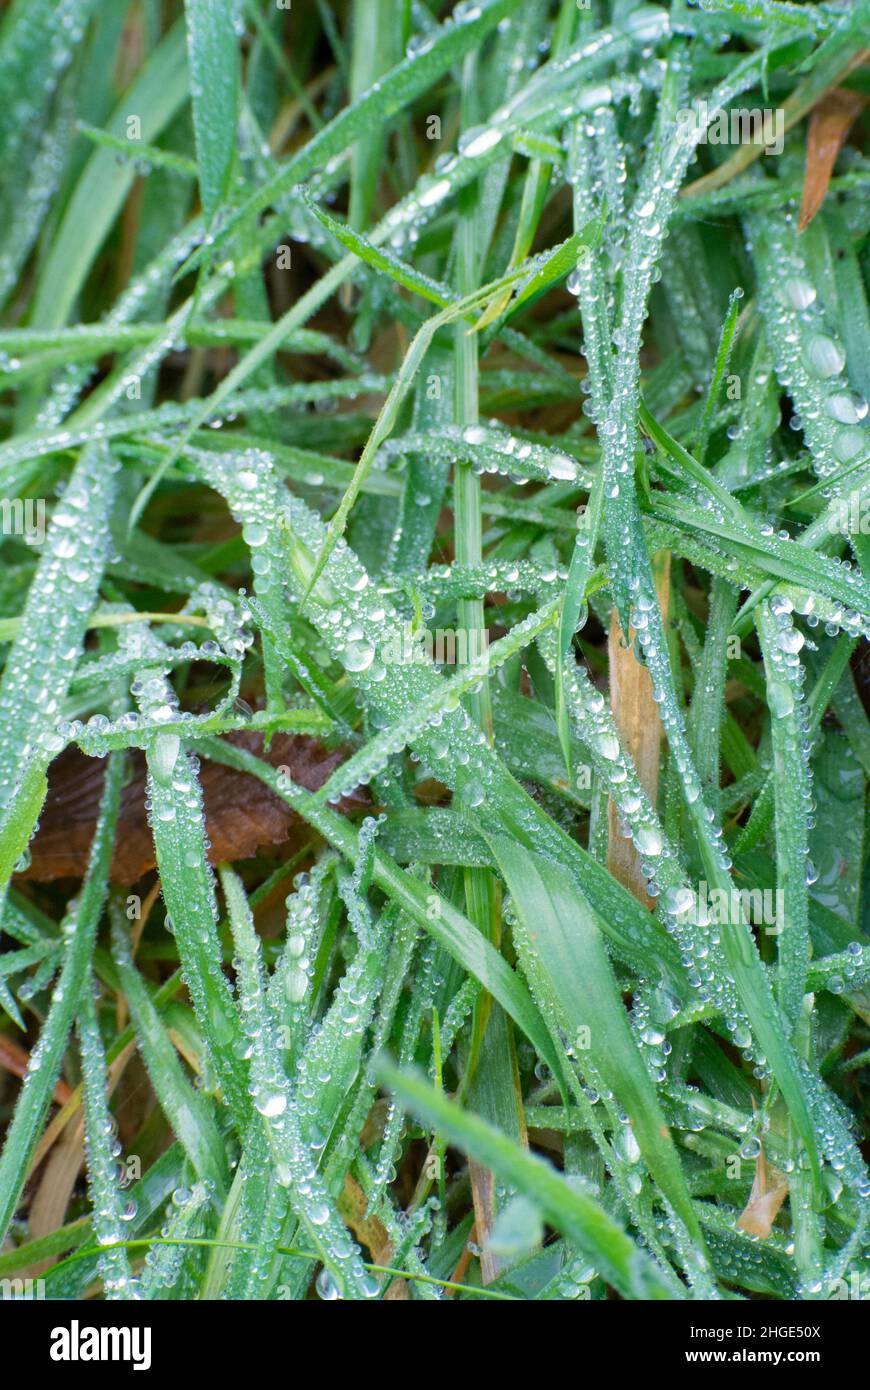 rain droplets on grass Stock Photo